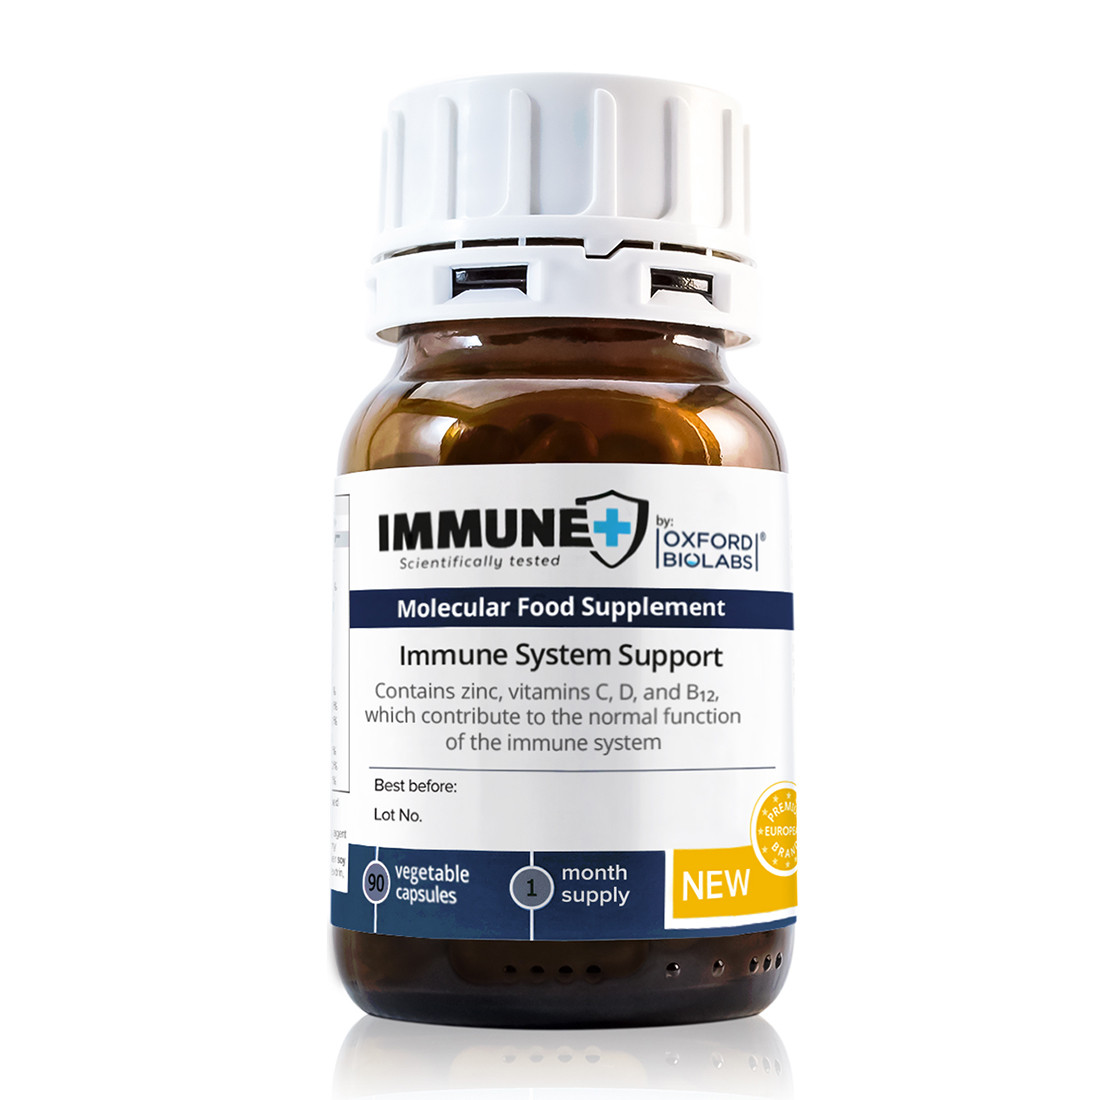 Отзывы о Oxford Biolabs Immune+ Molecular System Support - Молекулярная добавка для иммунитета